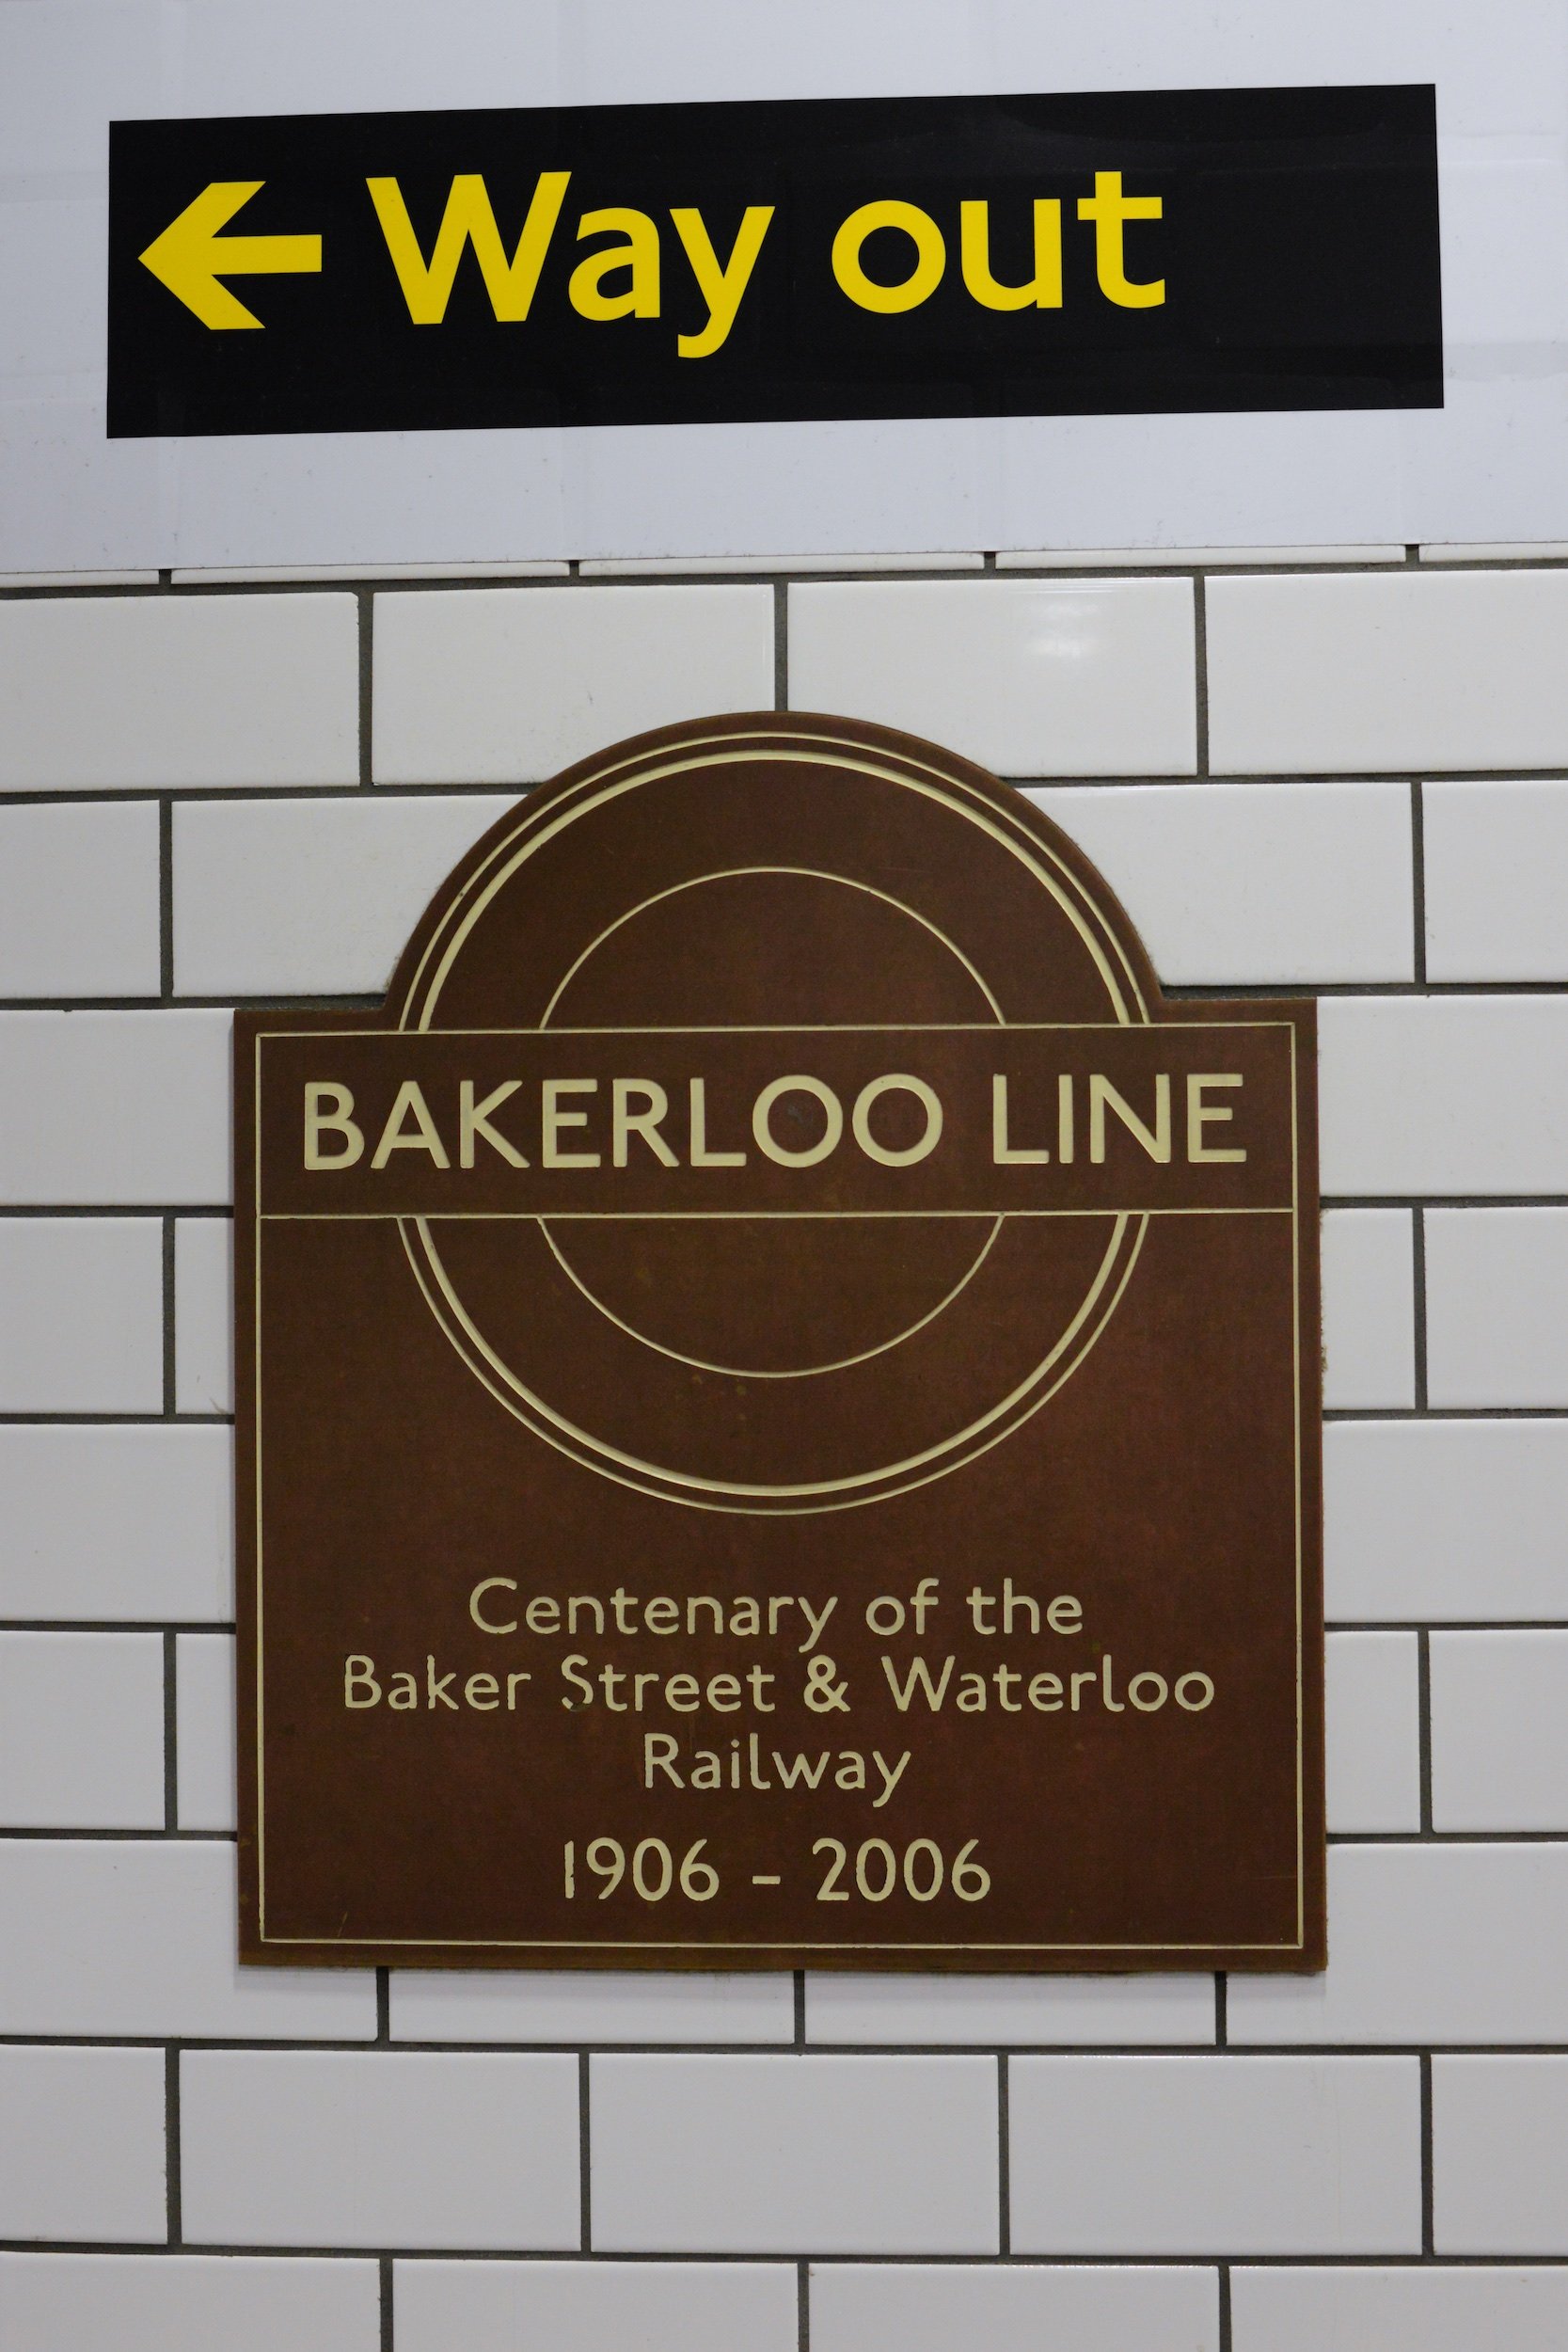 A plaque marking the Centenary of the Baker Street & Waterloo Railway, 1906 - 2006